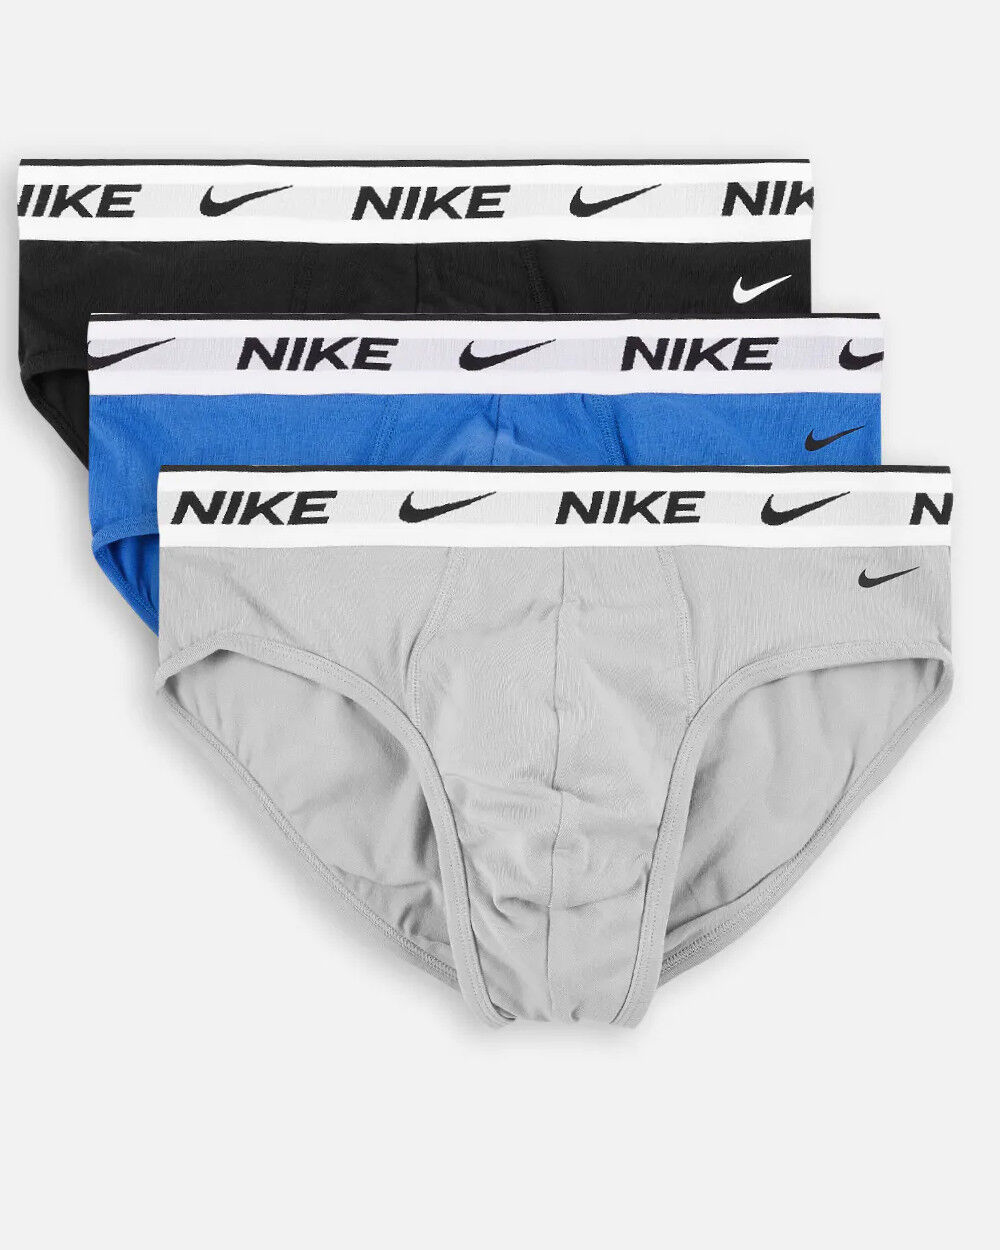 Nike Intimo slip mutante UOMO Underwear BRIEF Graphic 3 PACK Slip F8G cotone